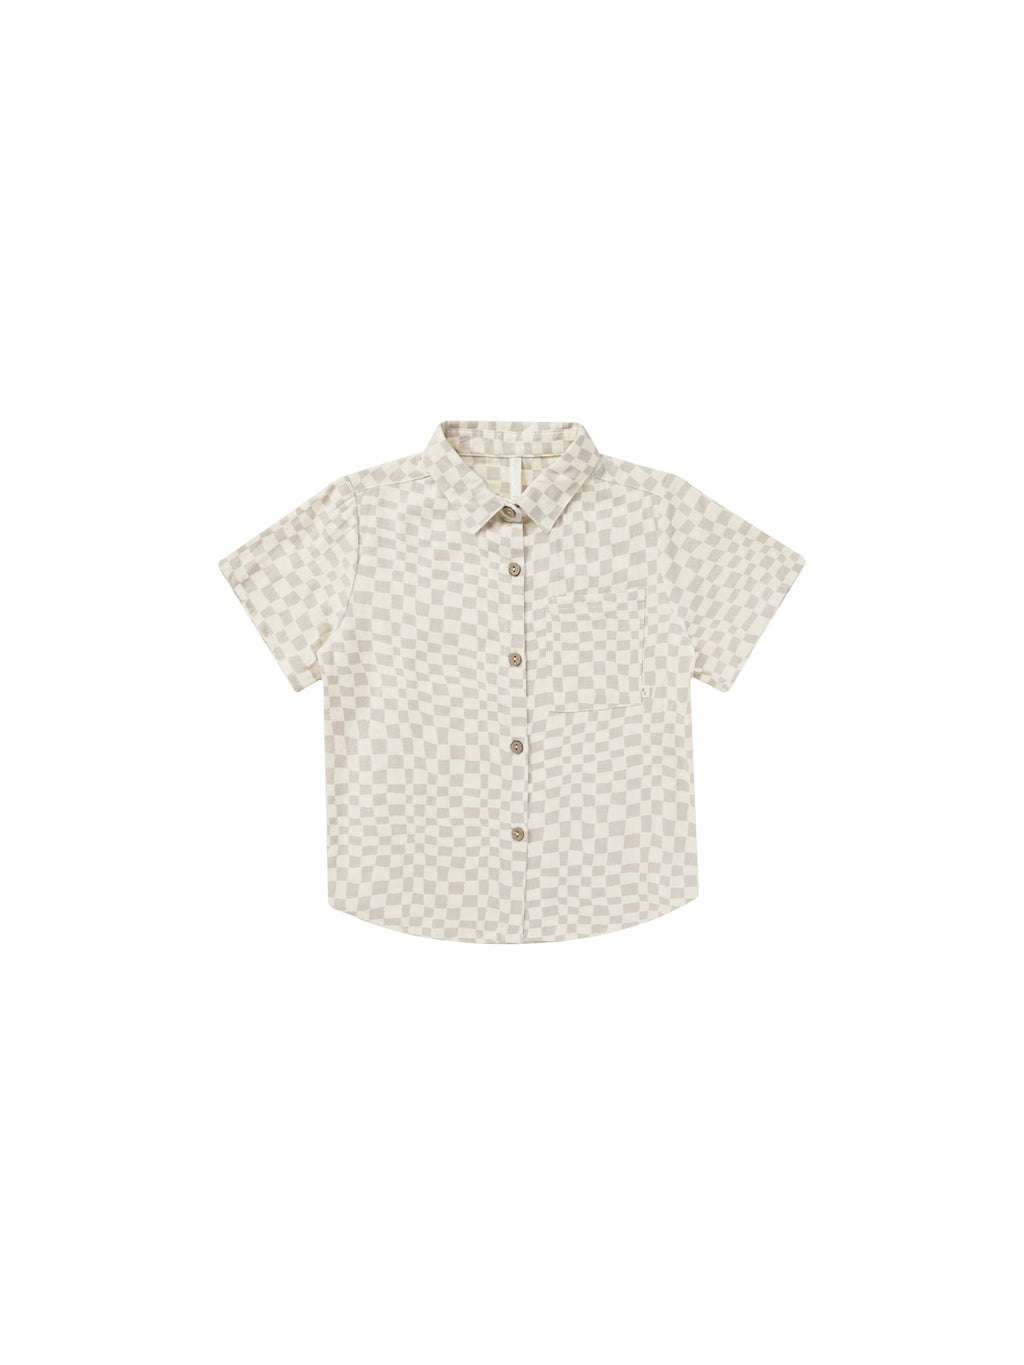 Rylee + Cru Collared Short Sleeve Shirt - Dove Check